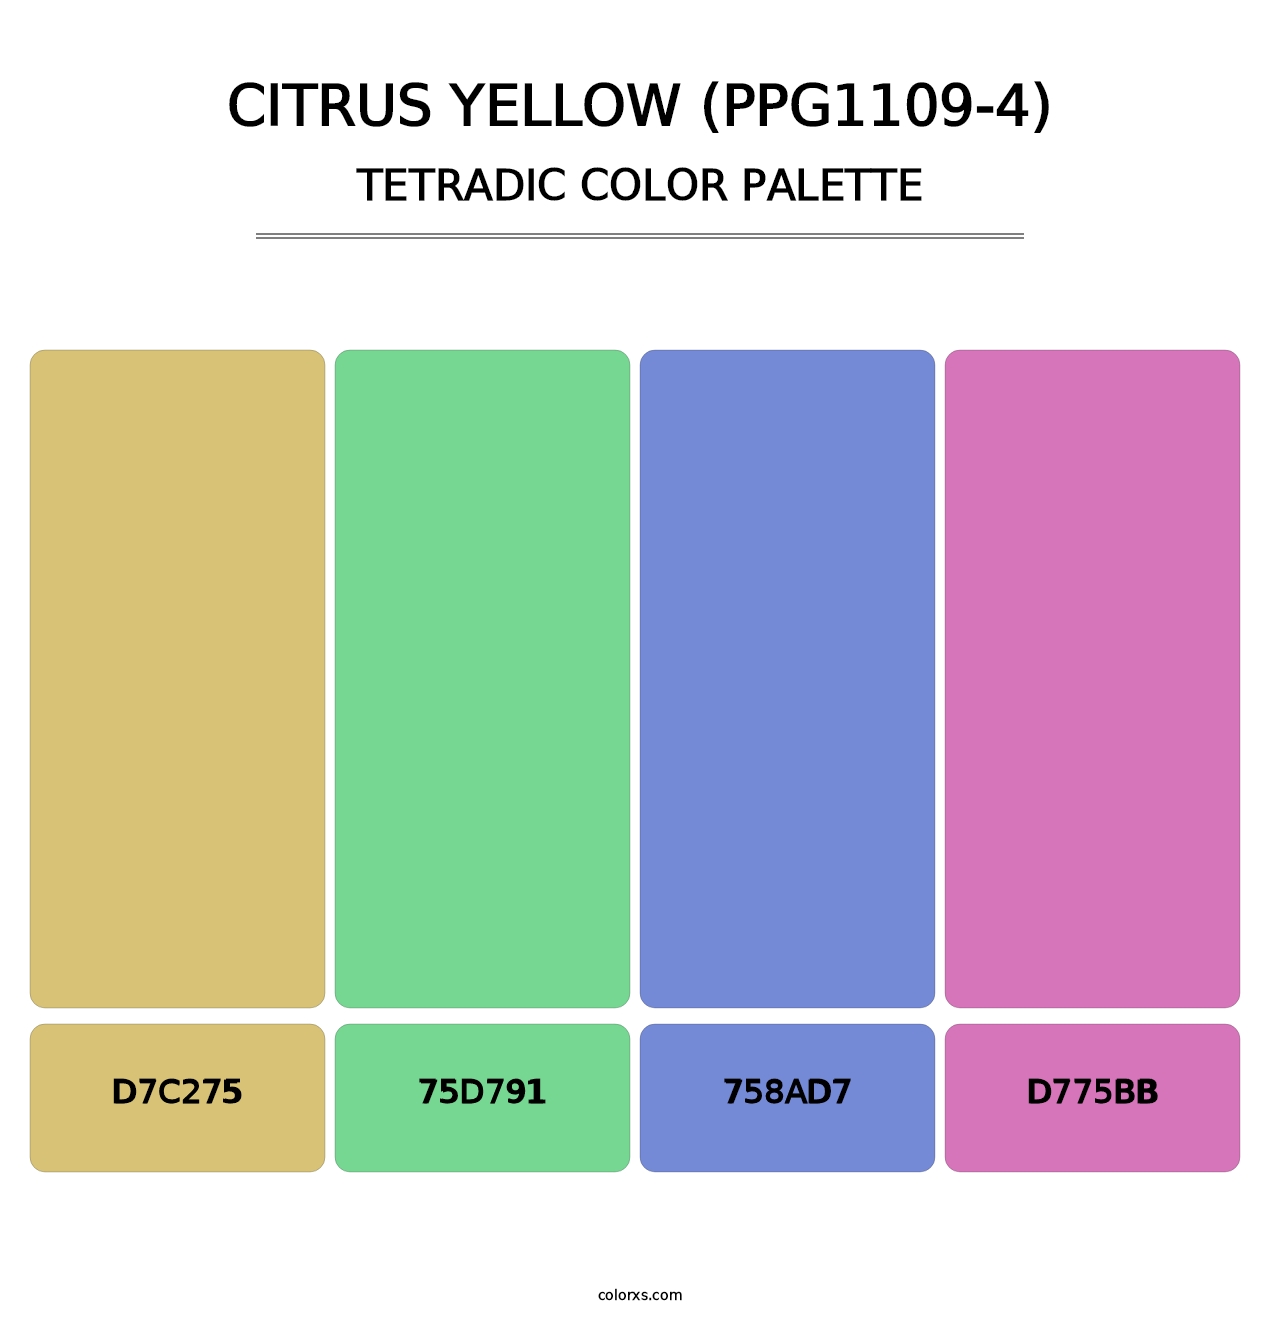 Citrus Yellow (PPG1109-4) - Tetradic Color Palette